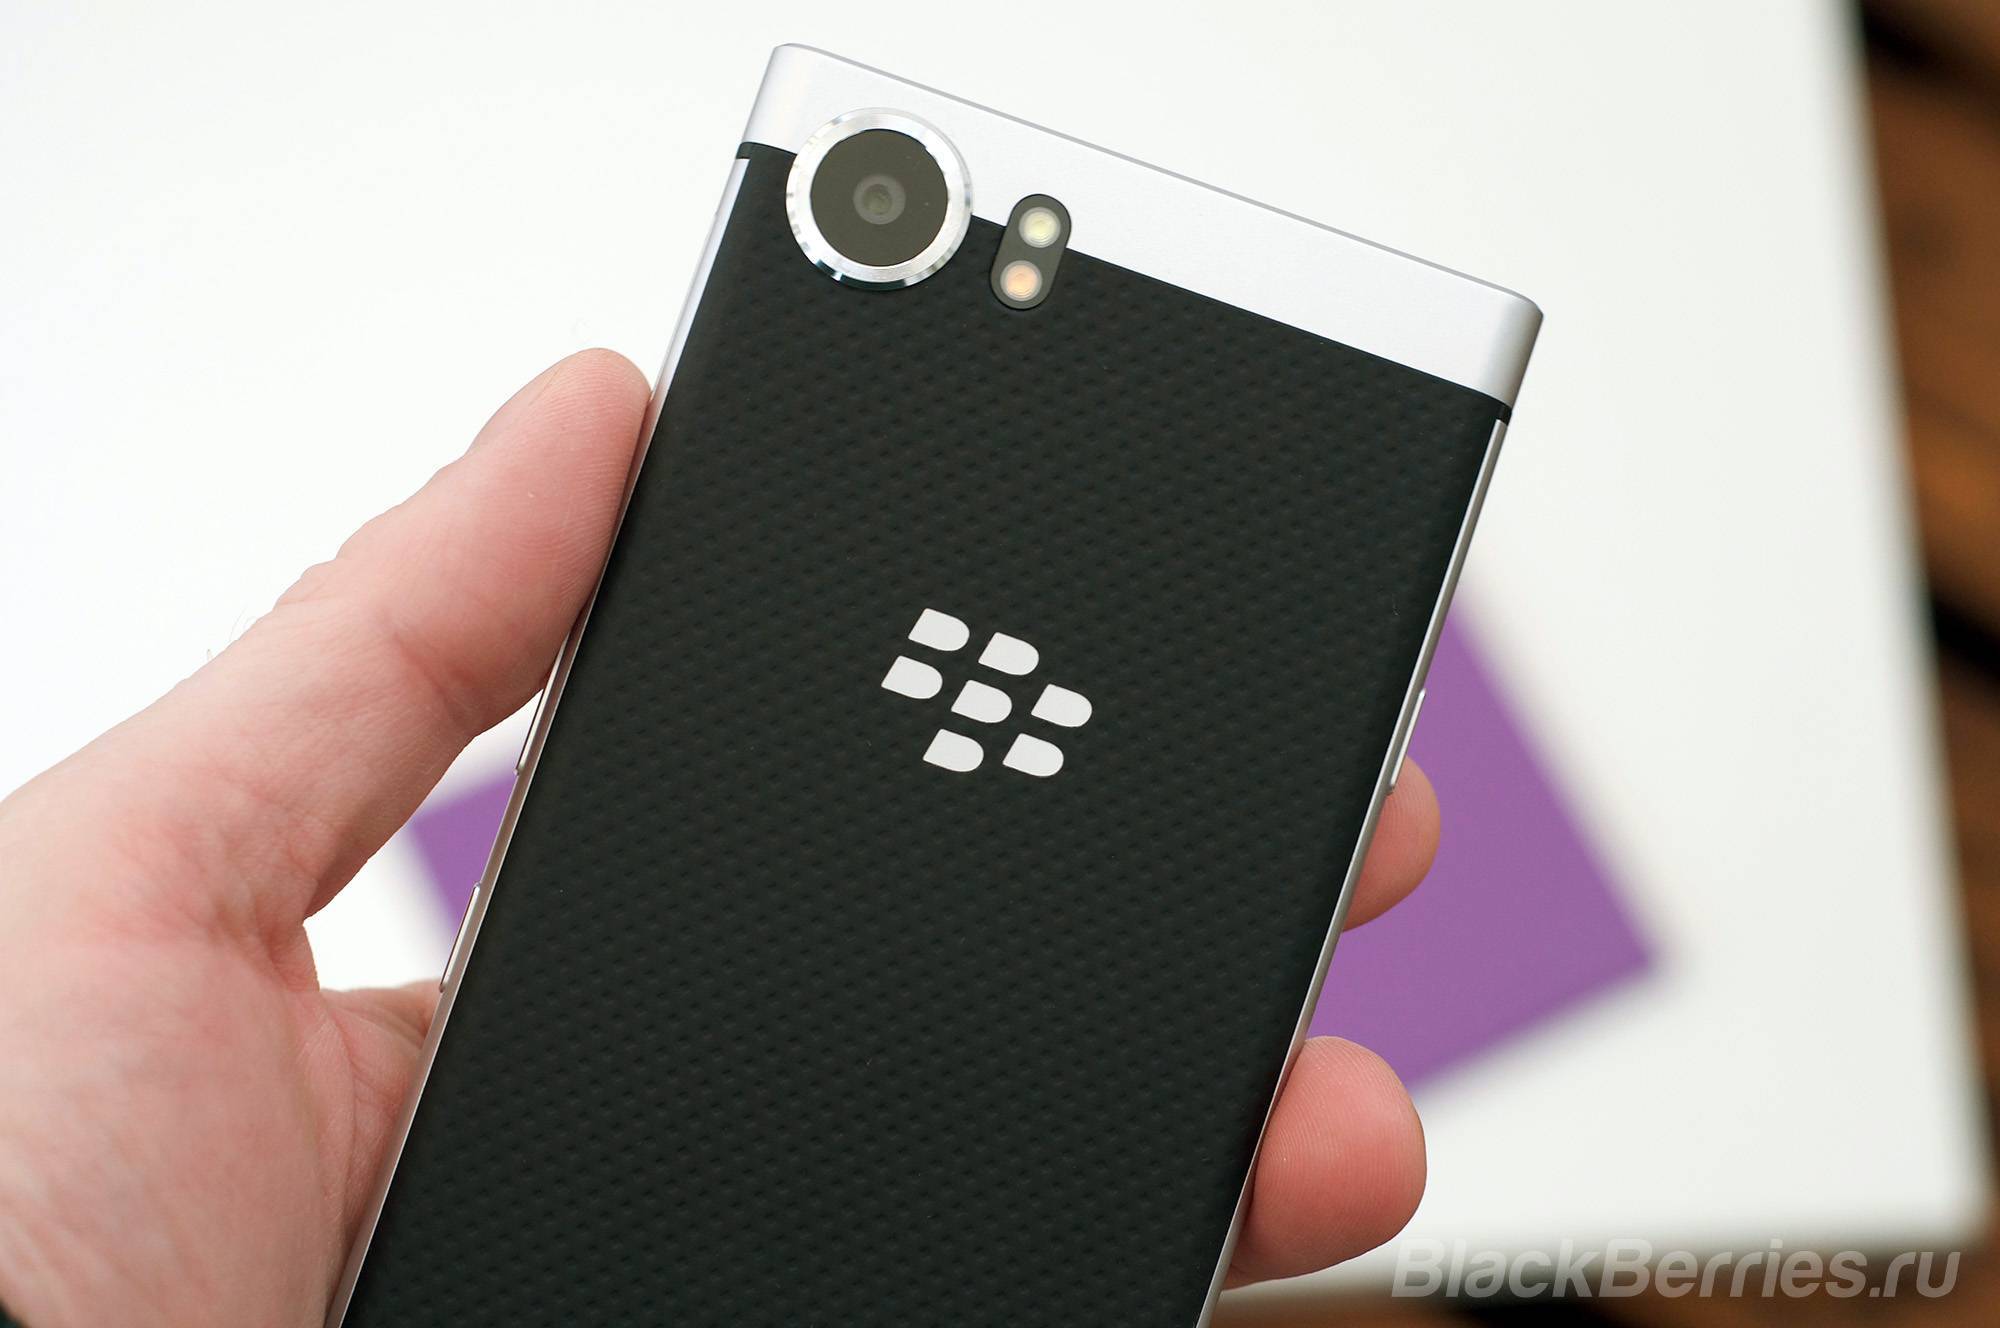 Blackberry keyone vs blackberry priv